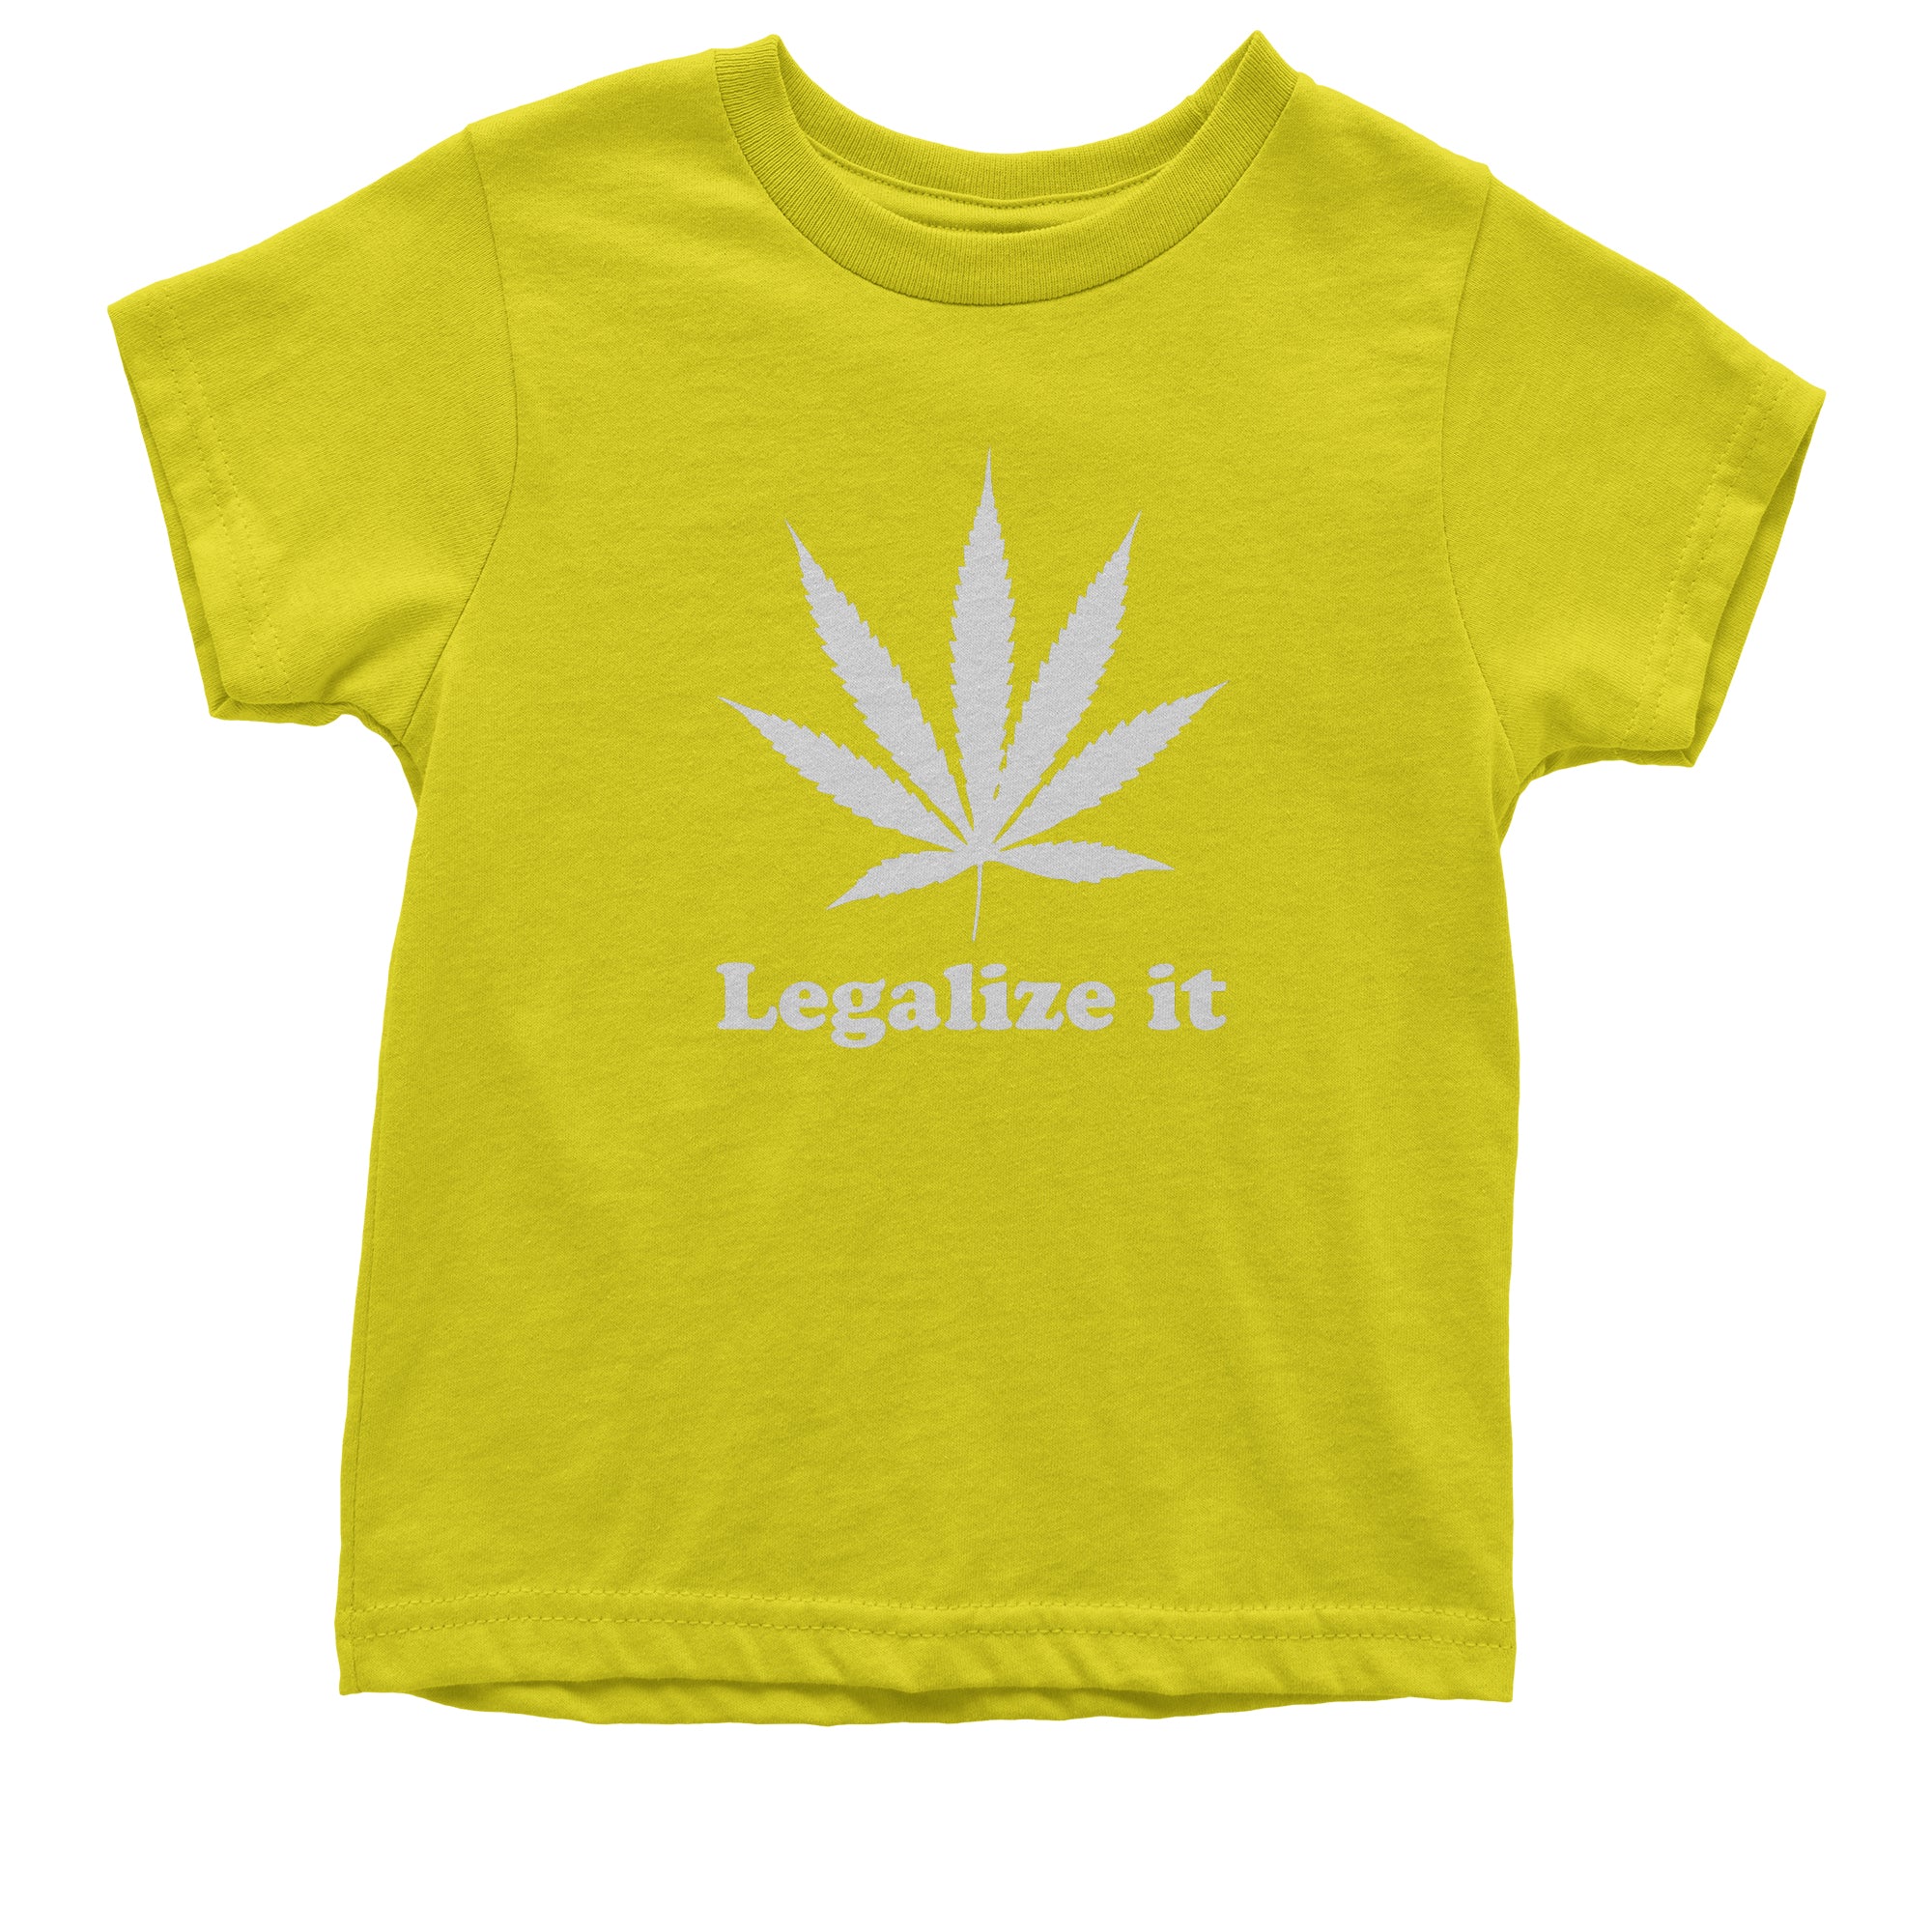 Legalize It Marijuana Pot Weed Kid's T-Shirt